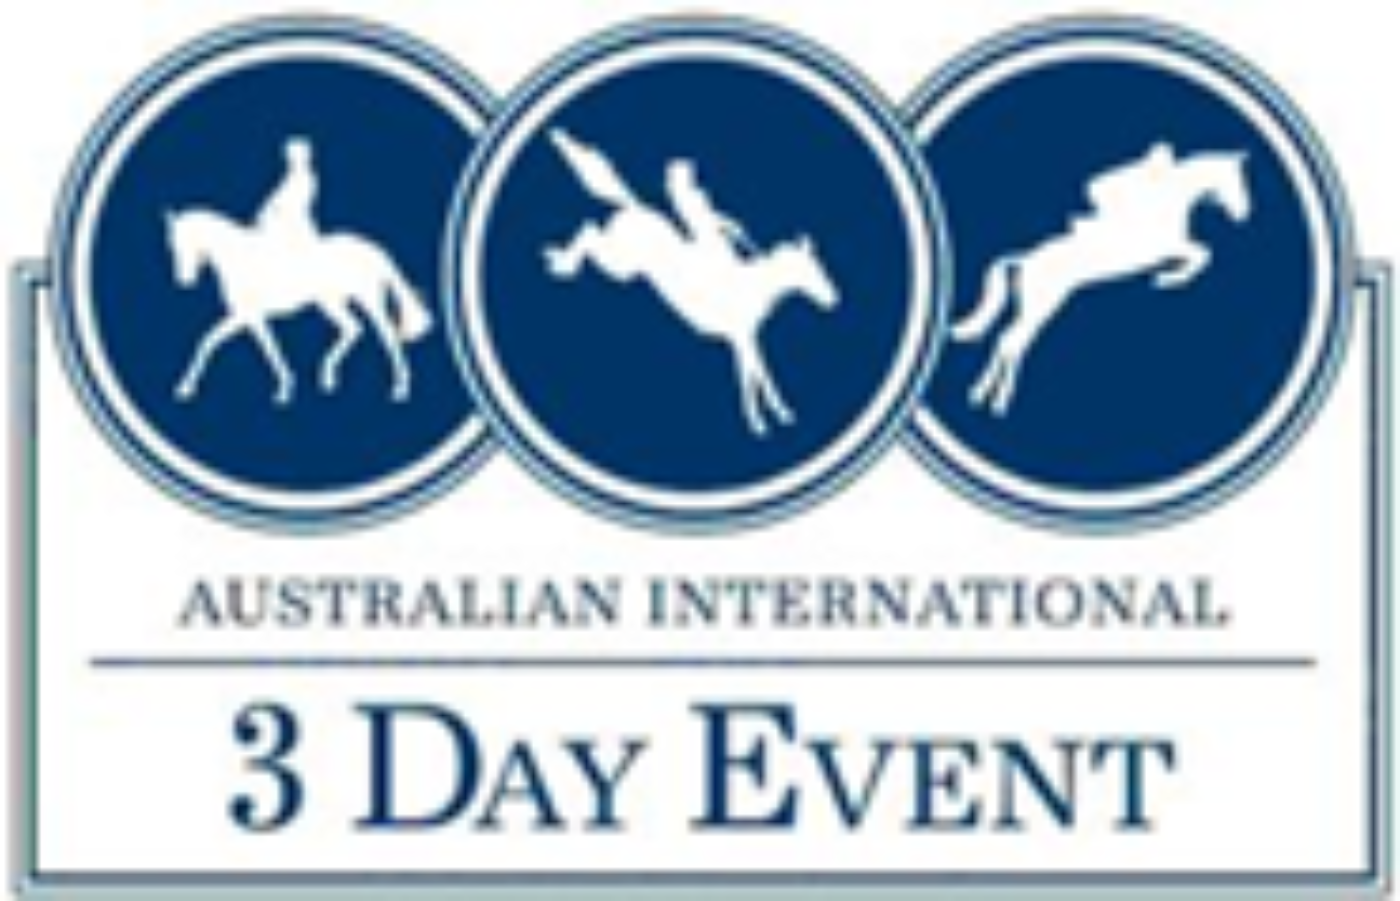 3 day eventing. Aussie логотип. The London International Horse show эмблема. Бренд с кенгуру на эмблеме австралиан. Australian International 3 Day event Adelaide 2011 кепка.